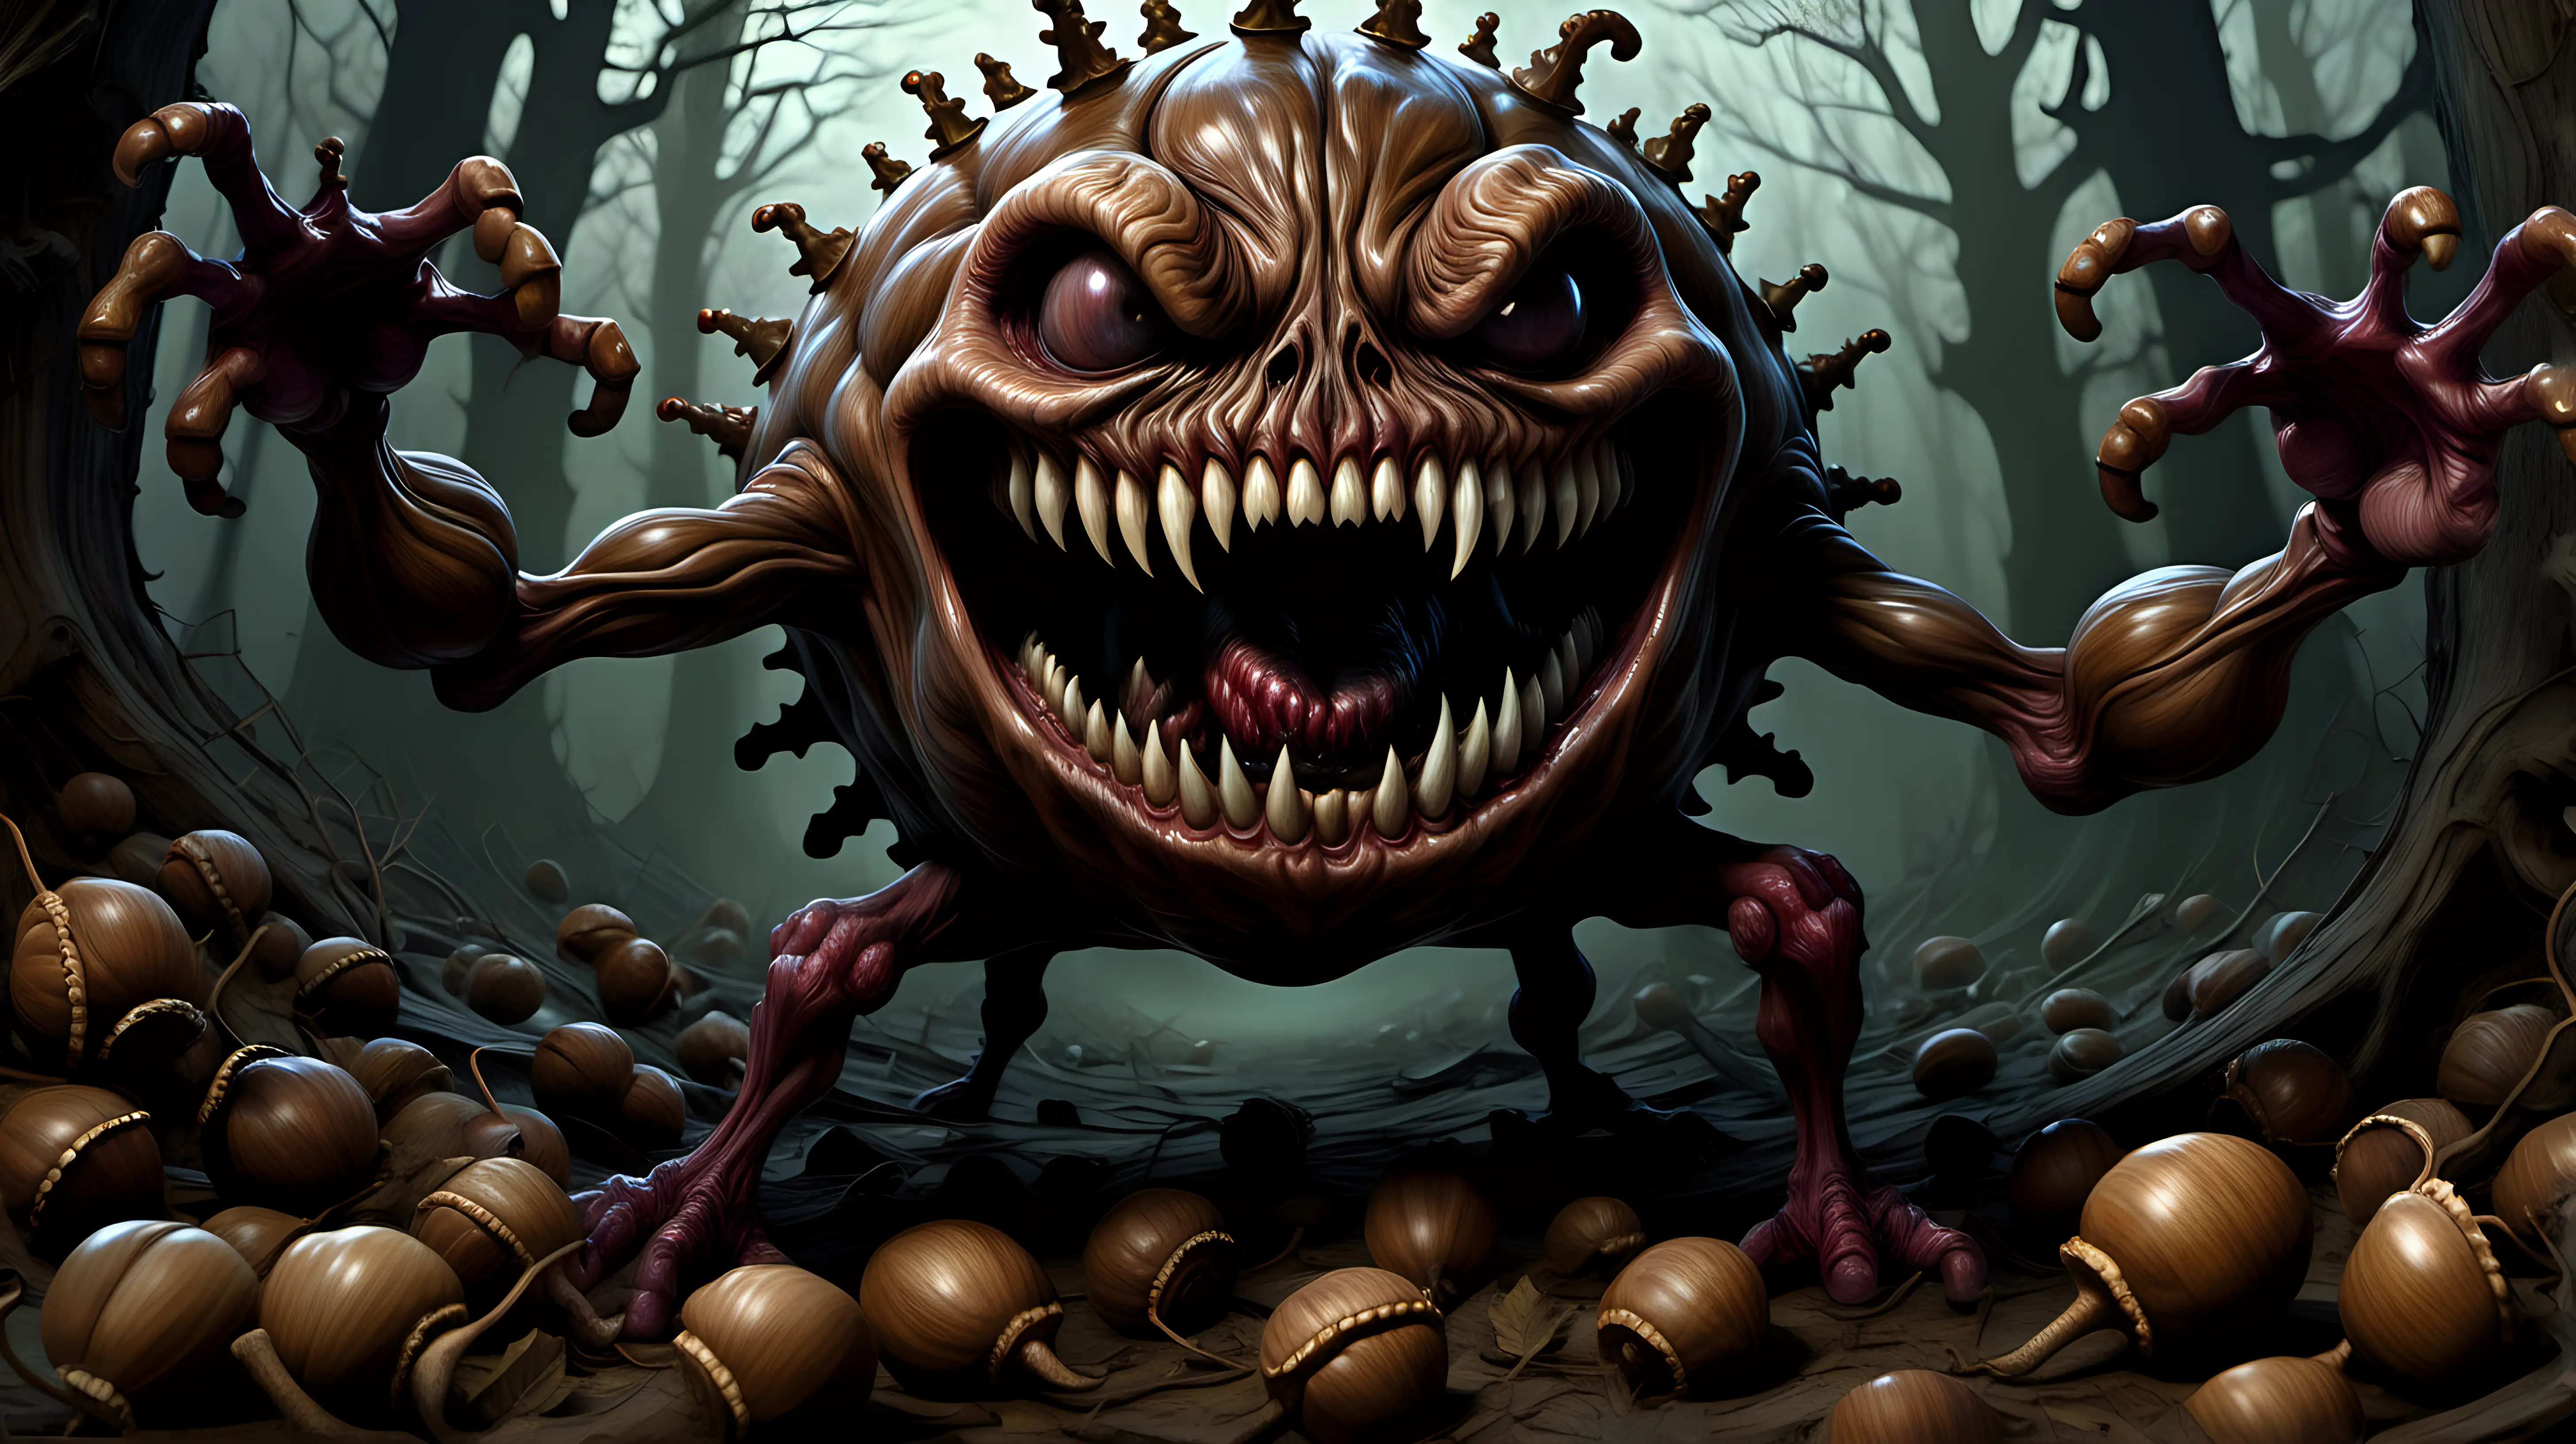 Fantasy Gothic Horror Terrifying Walnut Creature with Acorn Teeth